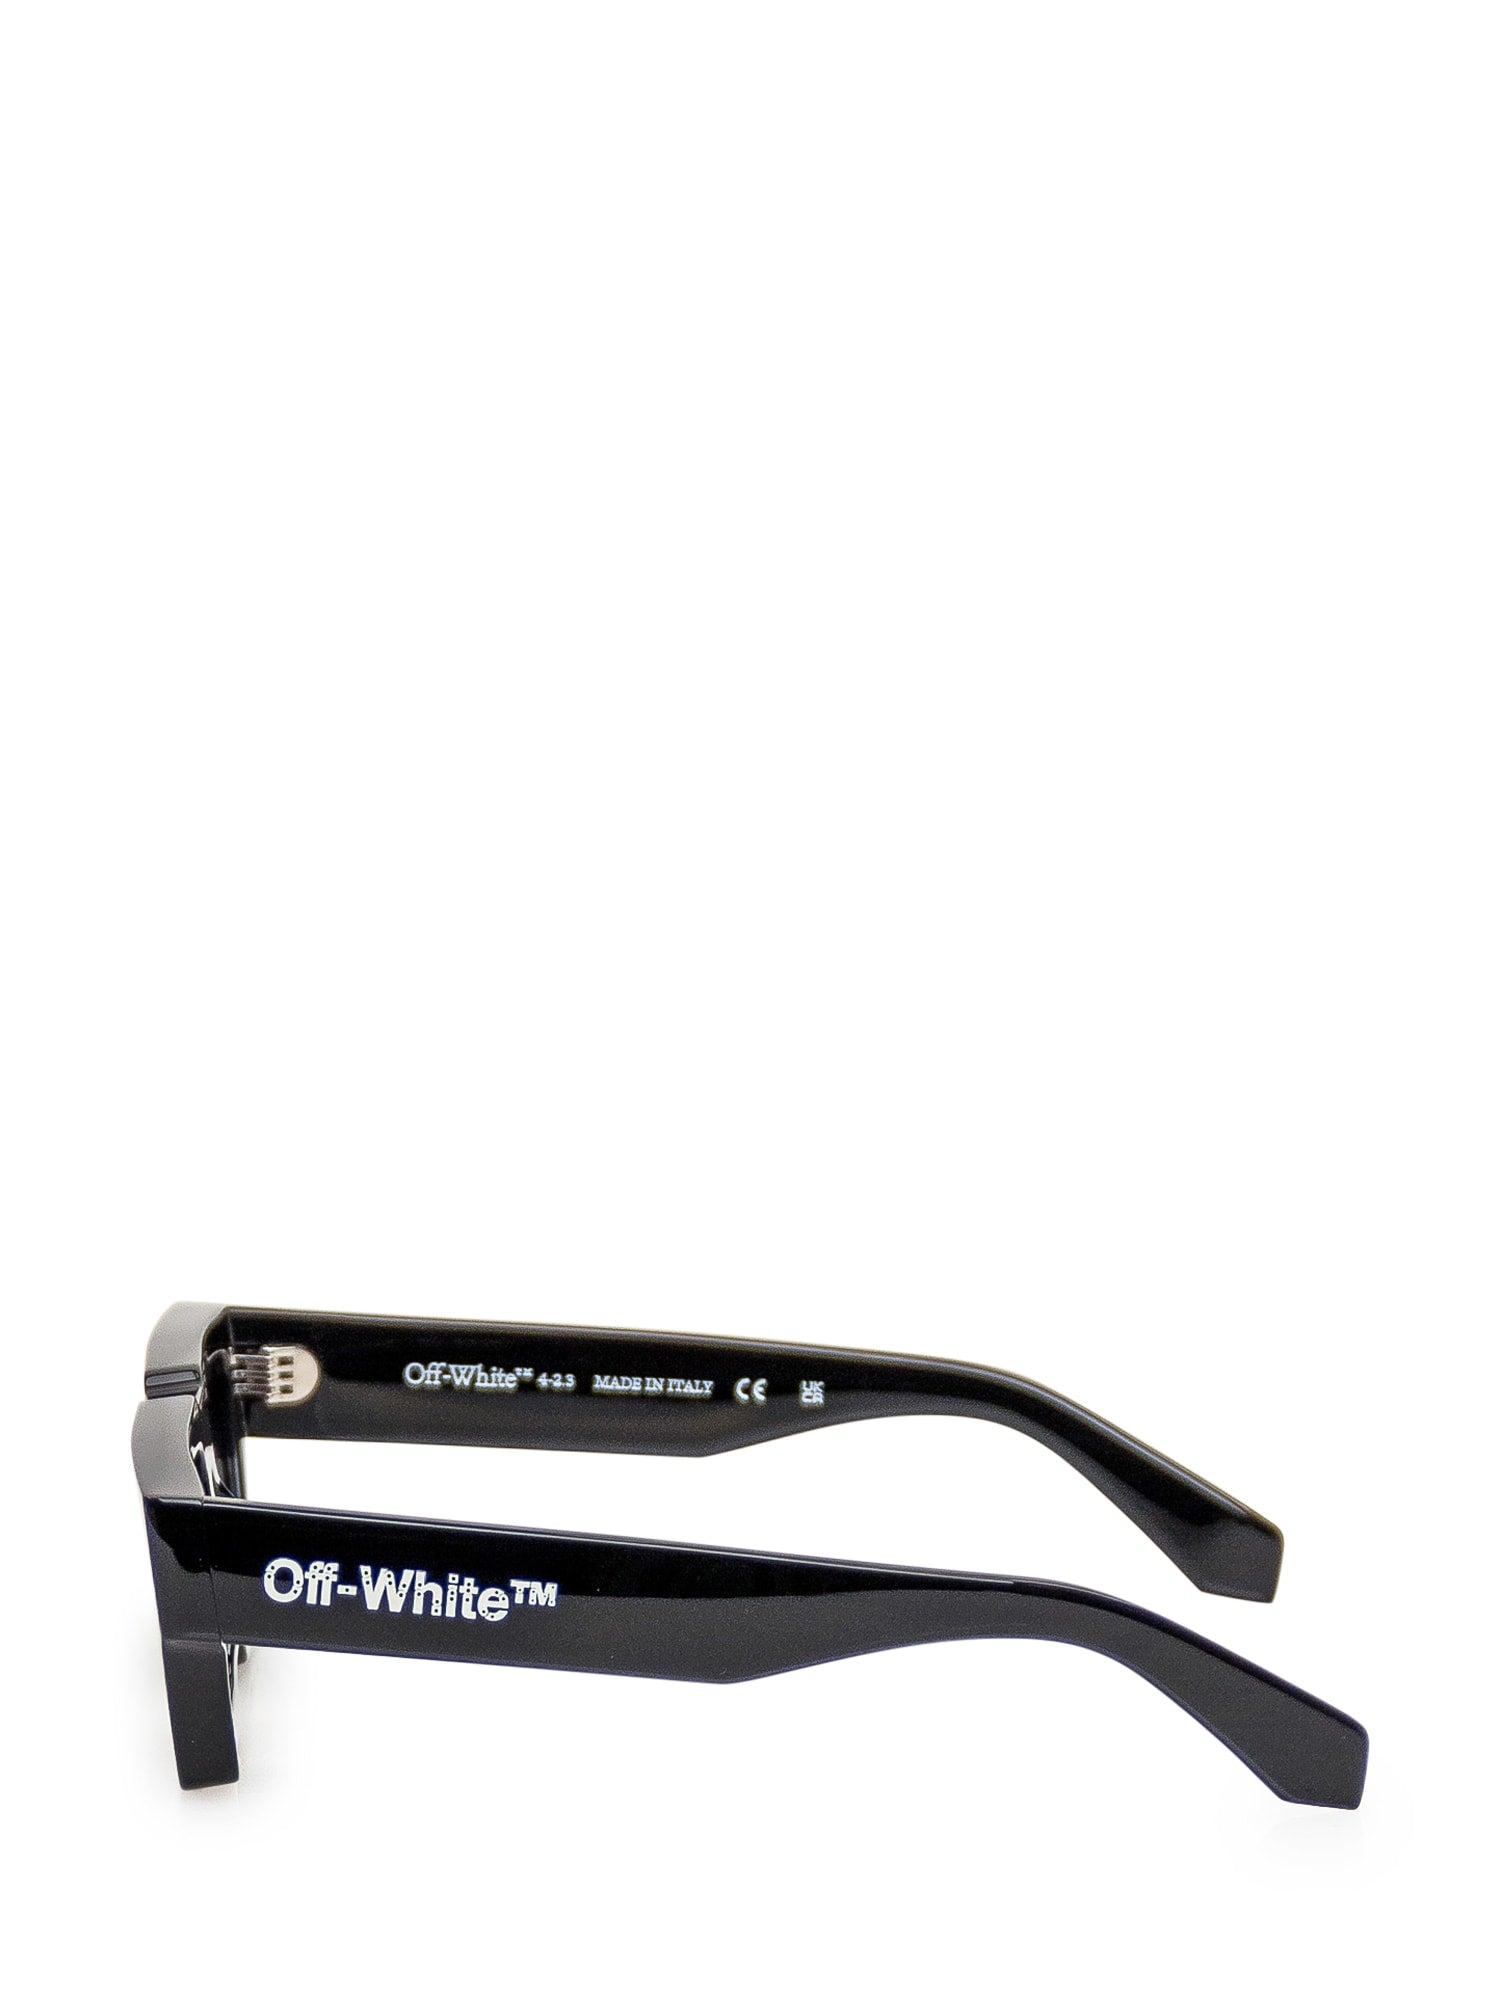 off white manchester sunglasses